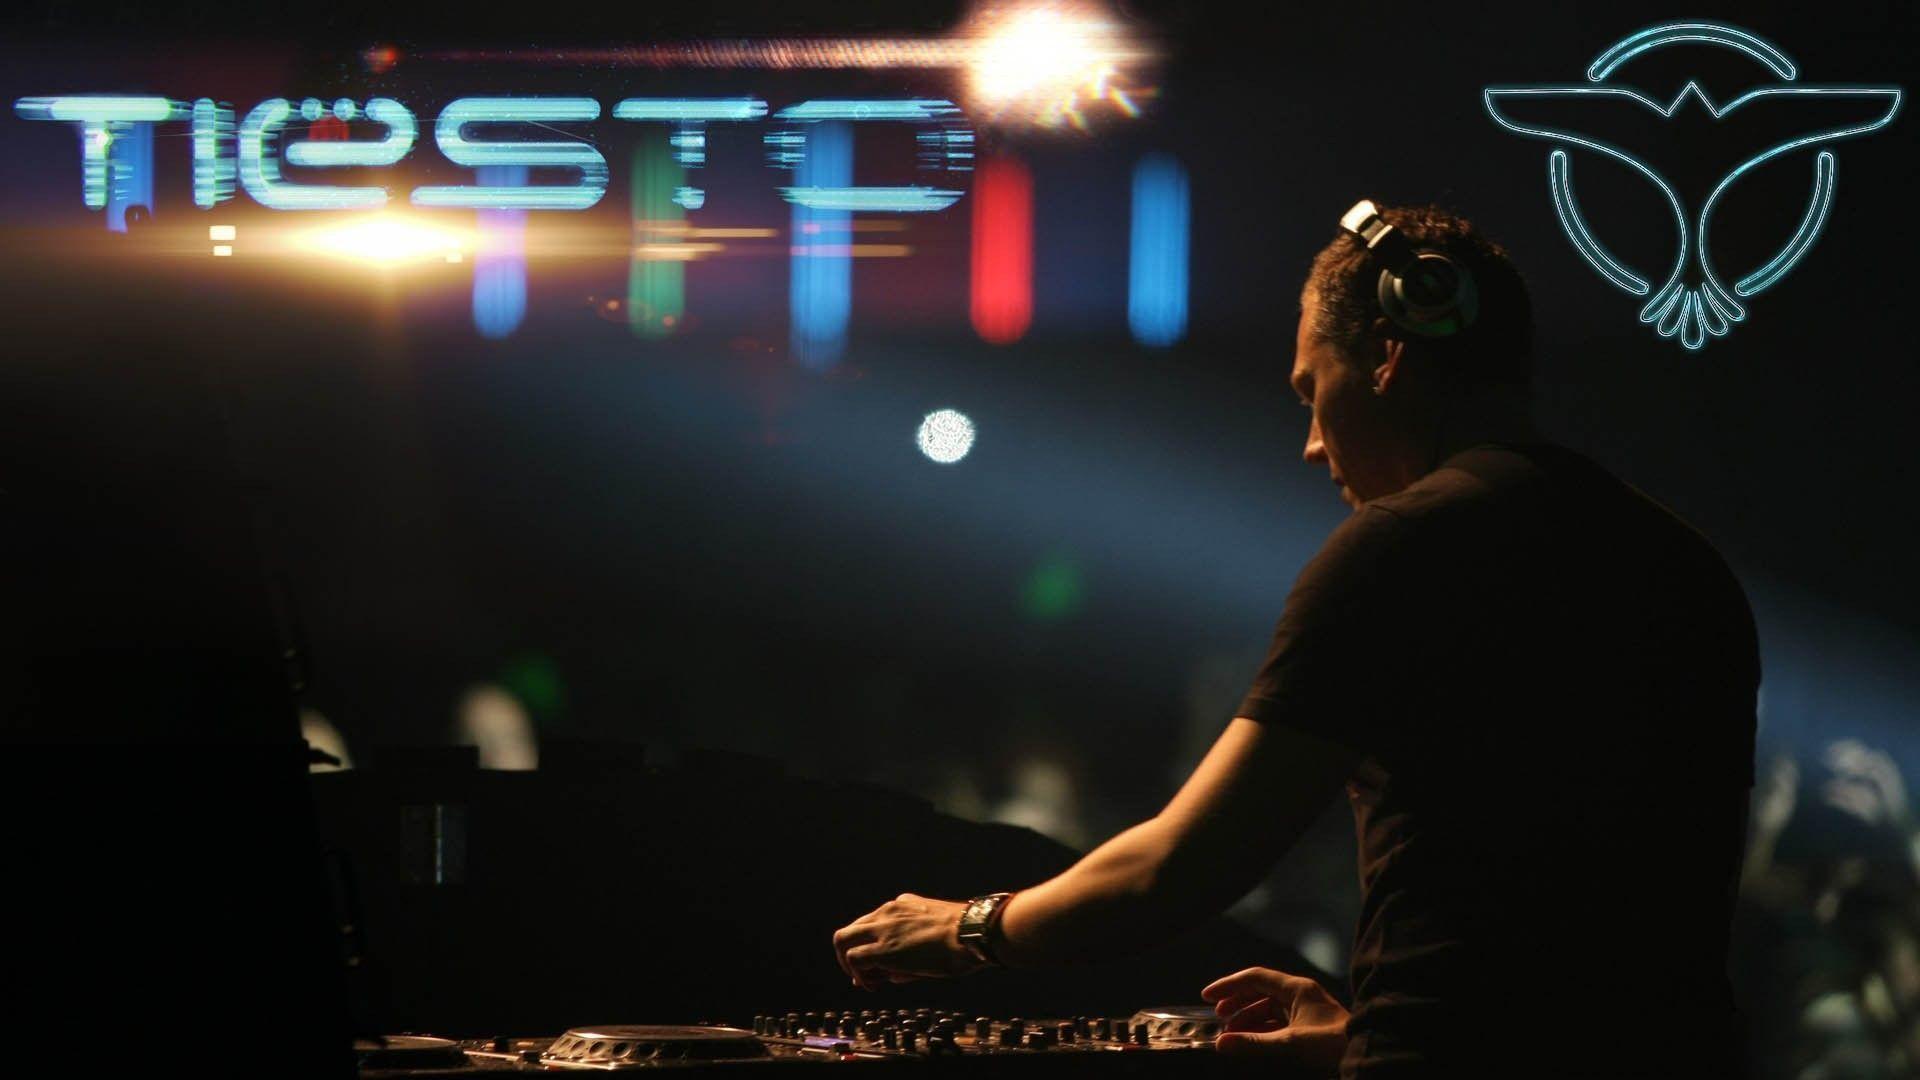 DJ Tiesto Wallpapers 2015